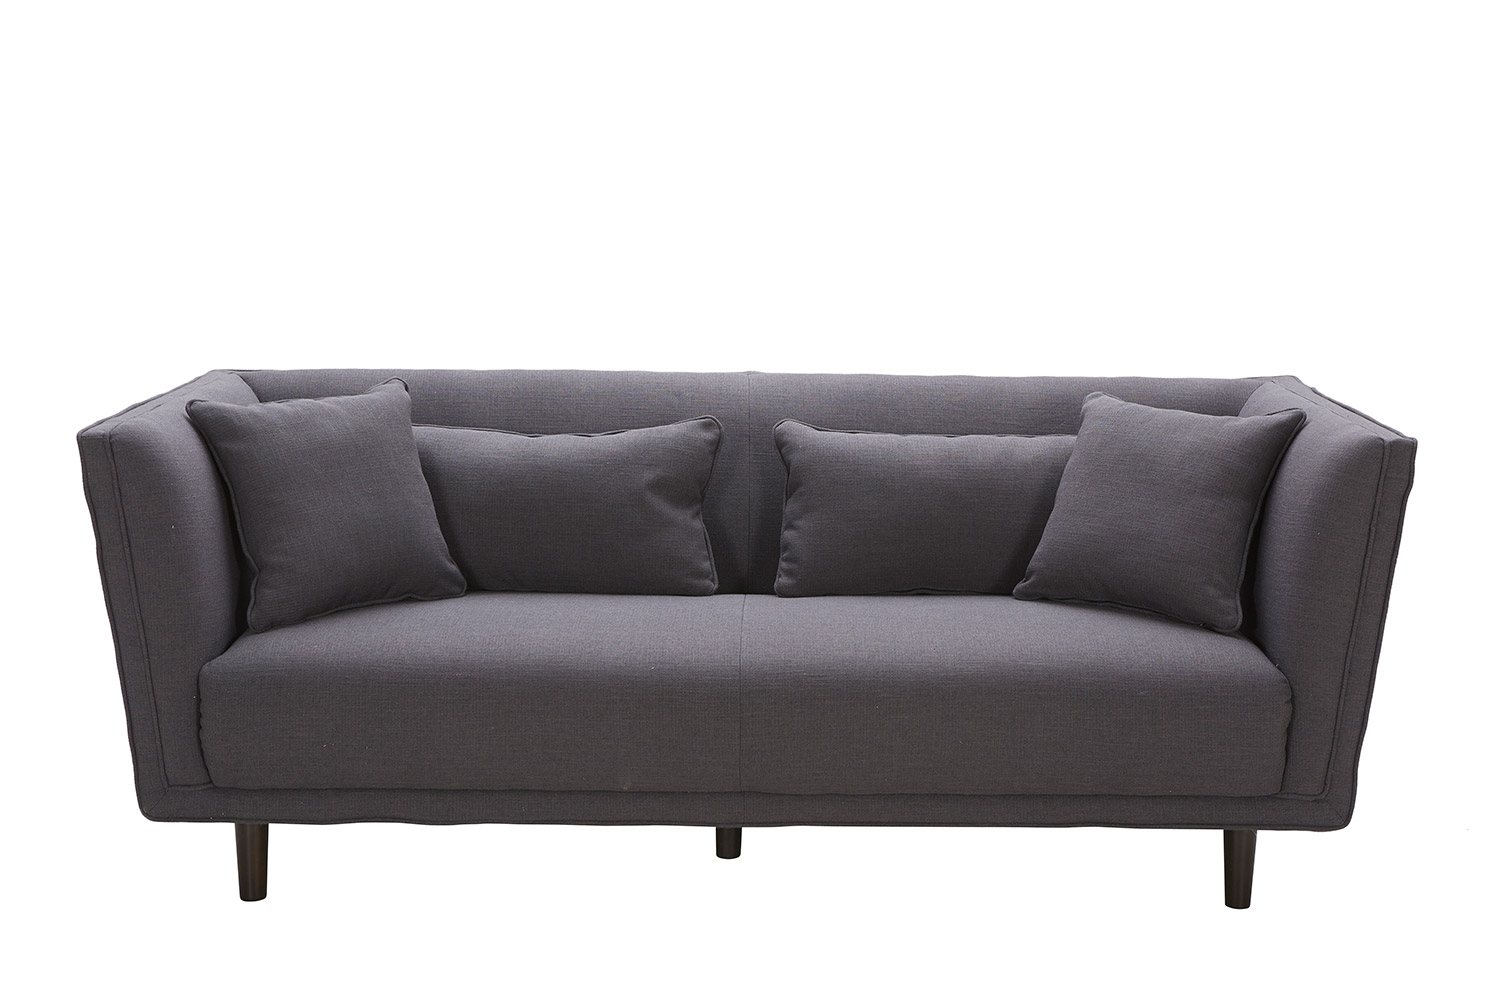 ELEMENTS Fine Home Furnishings Manhattan Fabric Sofa - Concrete